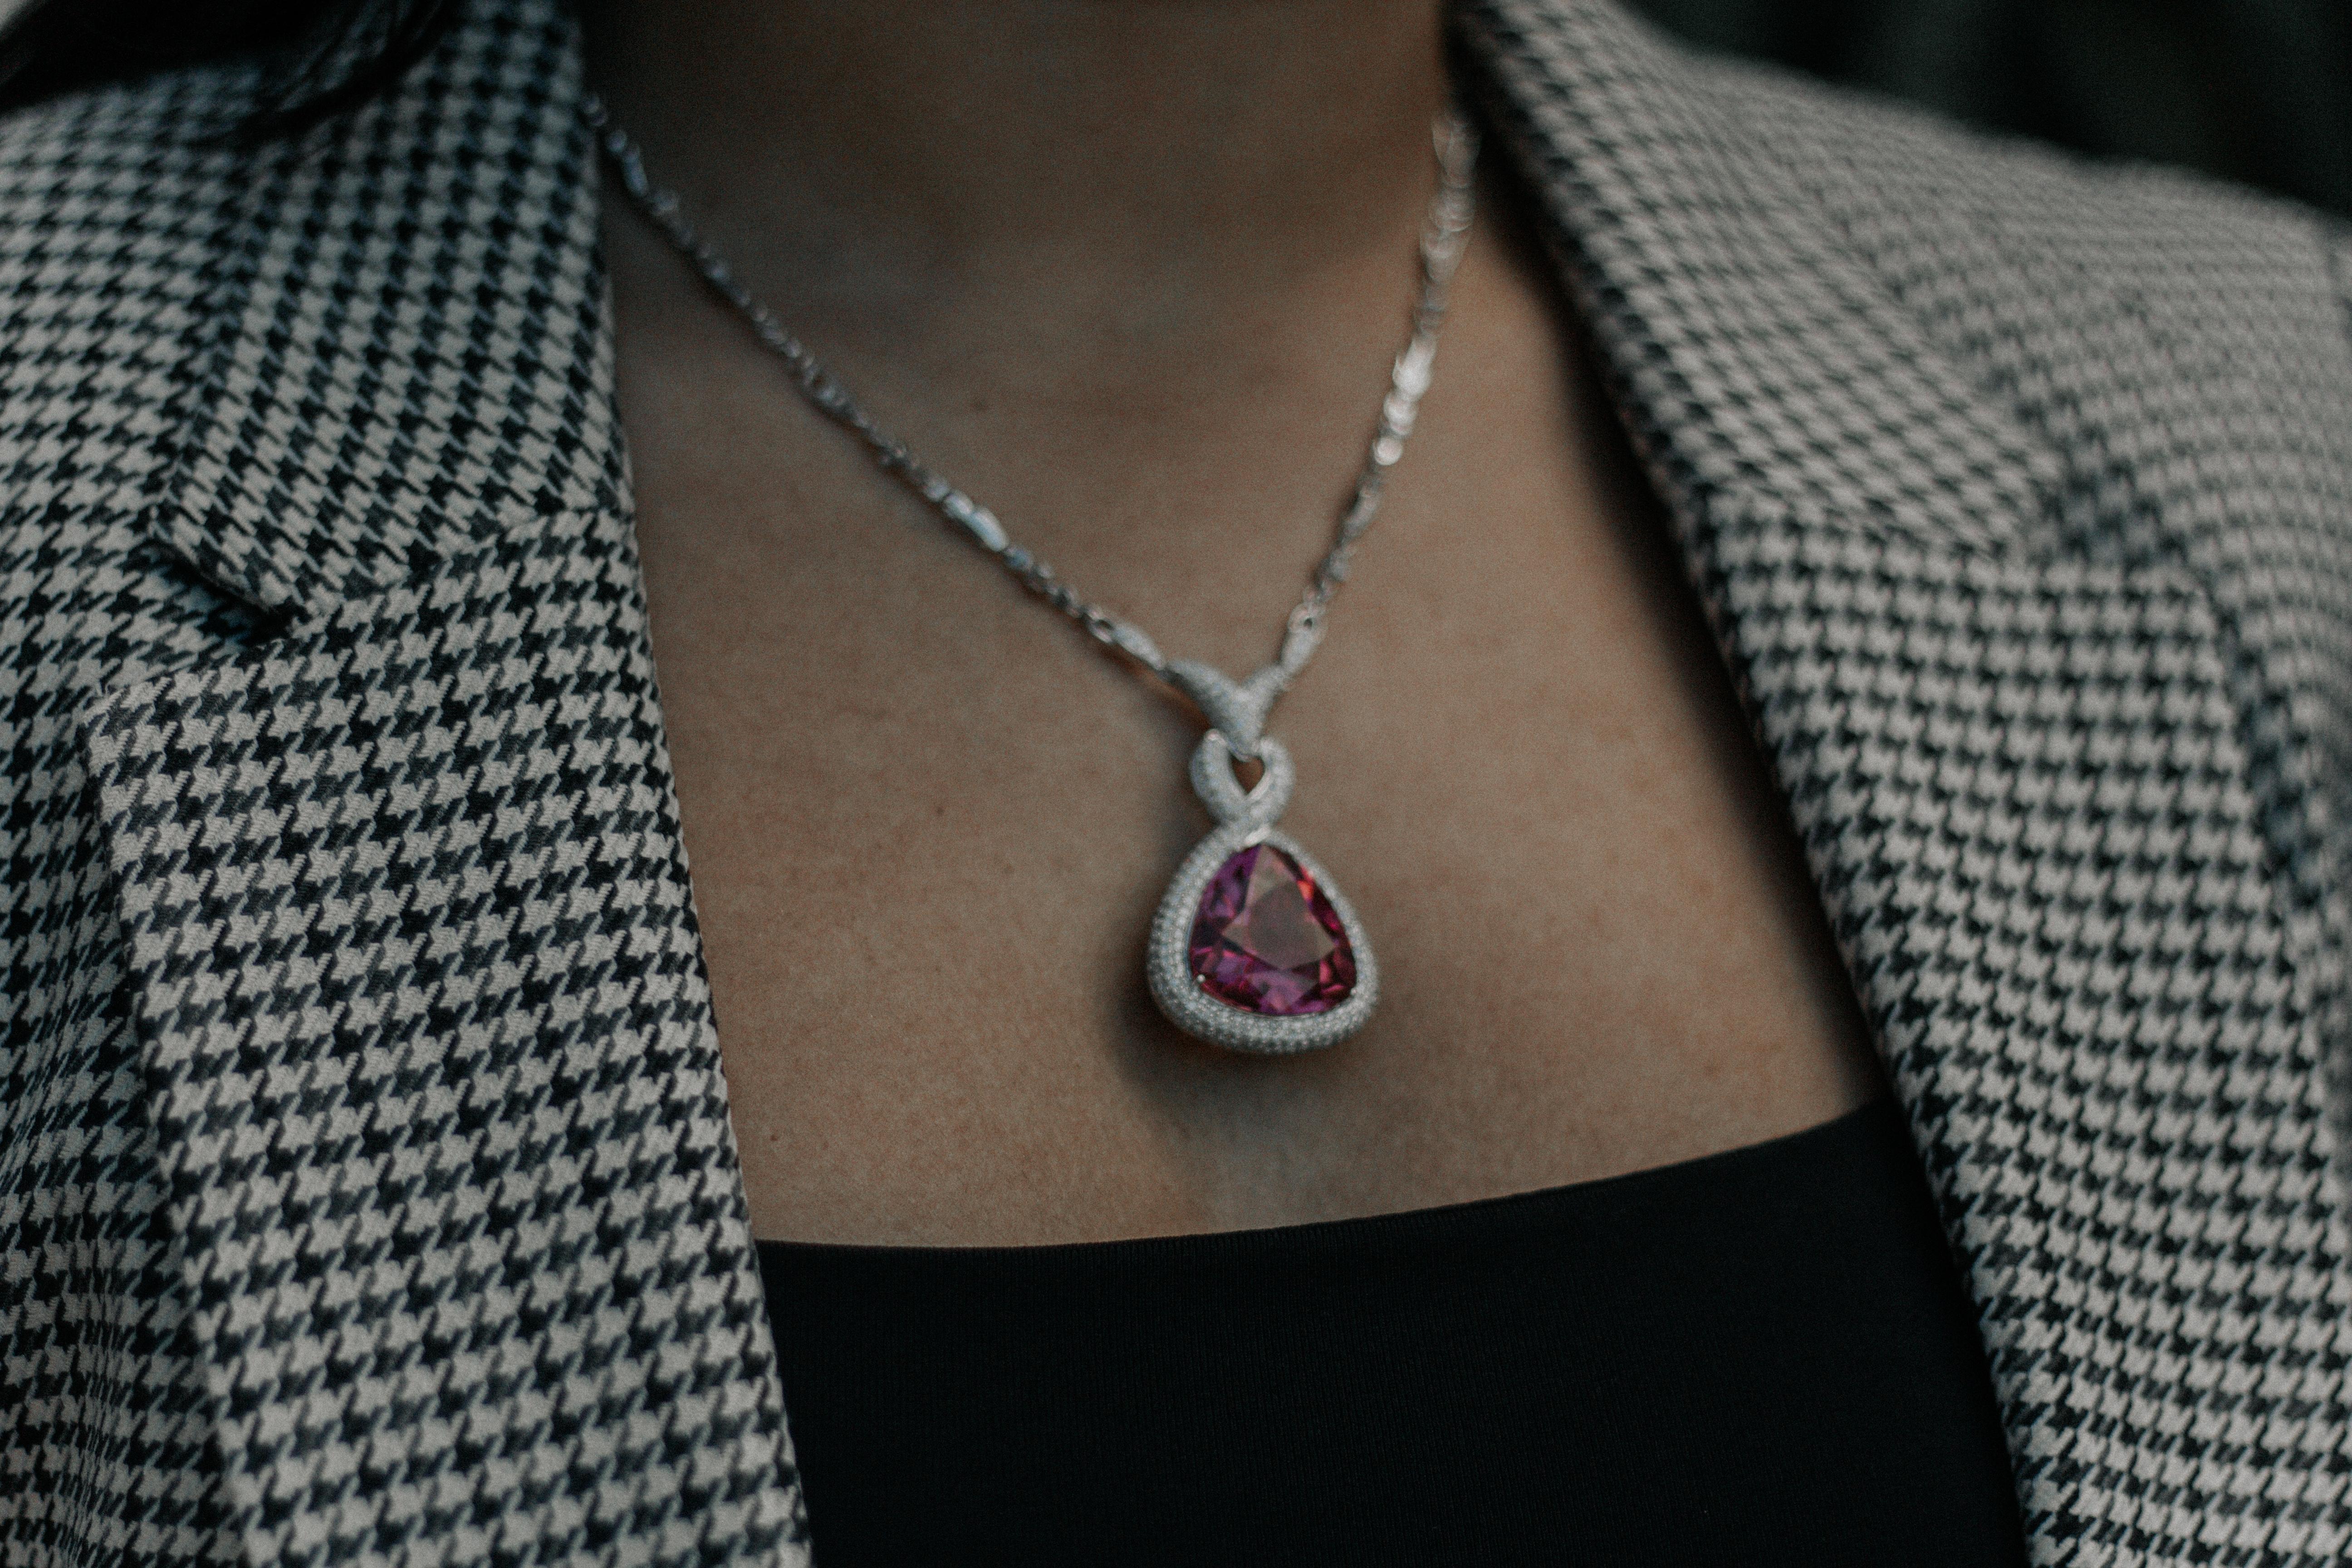 Renaissance 31.24 Carat Pink Tourmaline 4.38 Carat Diamond Pendant Necklace For Sale